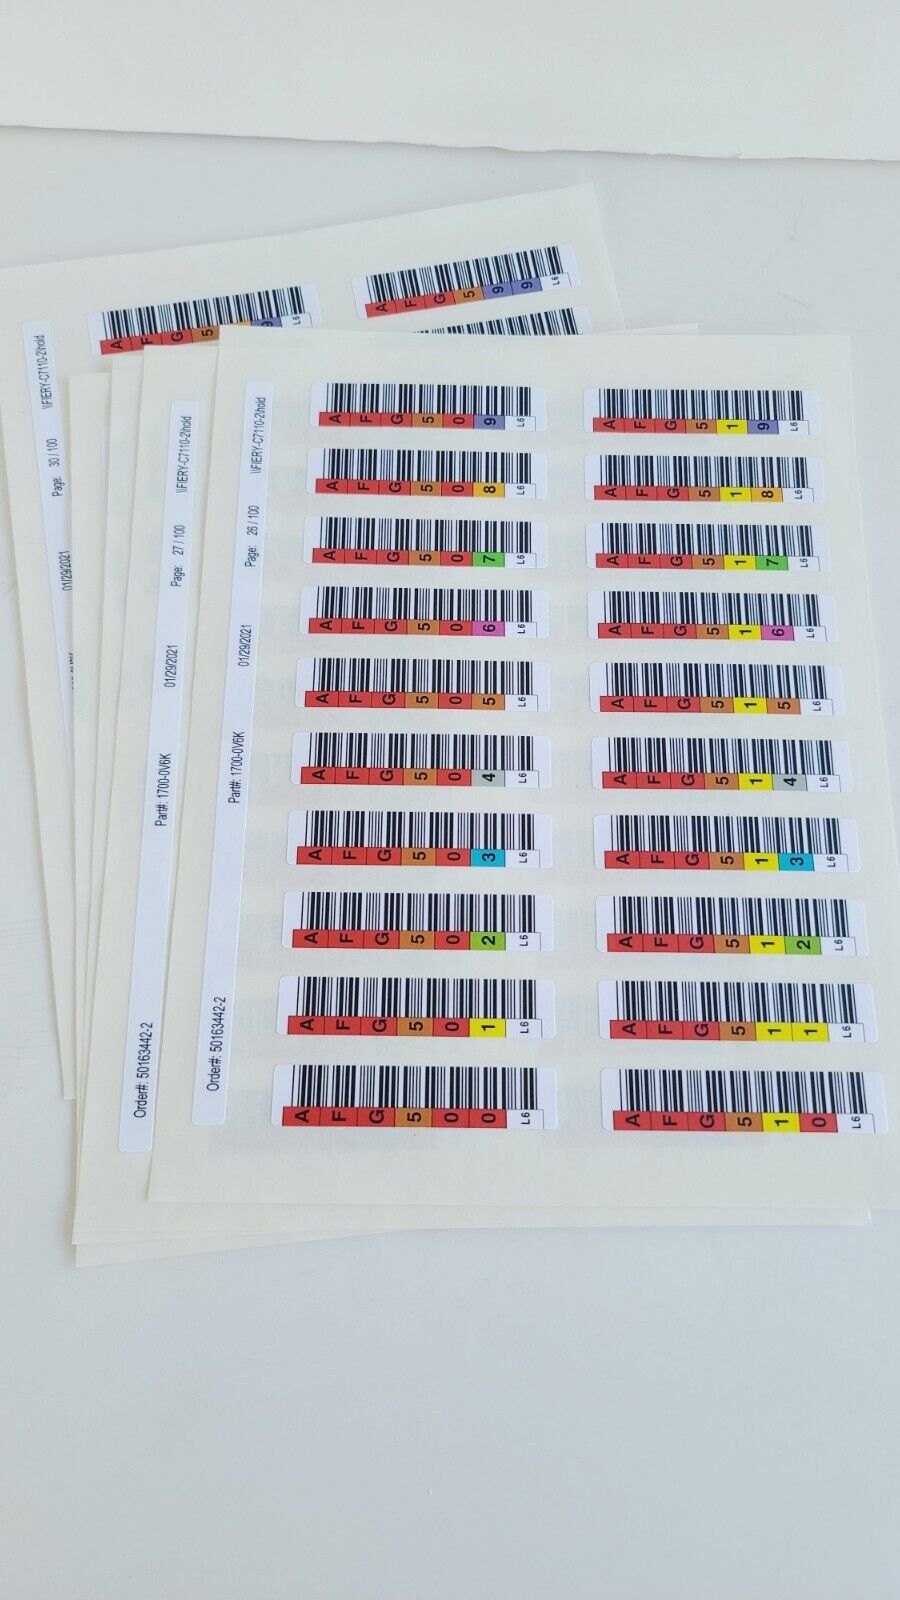 LTO6 Tape Media Cartridge Barcode Labels - Sheet of 20 Printed Vertical